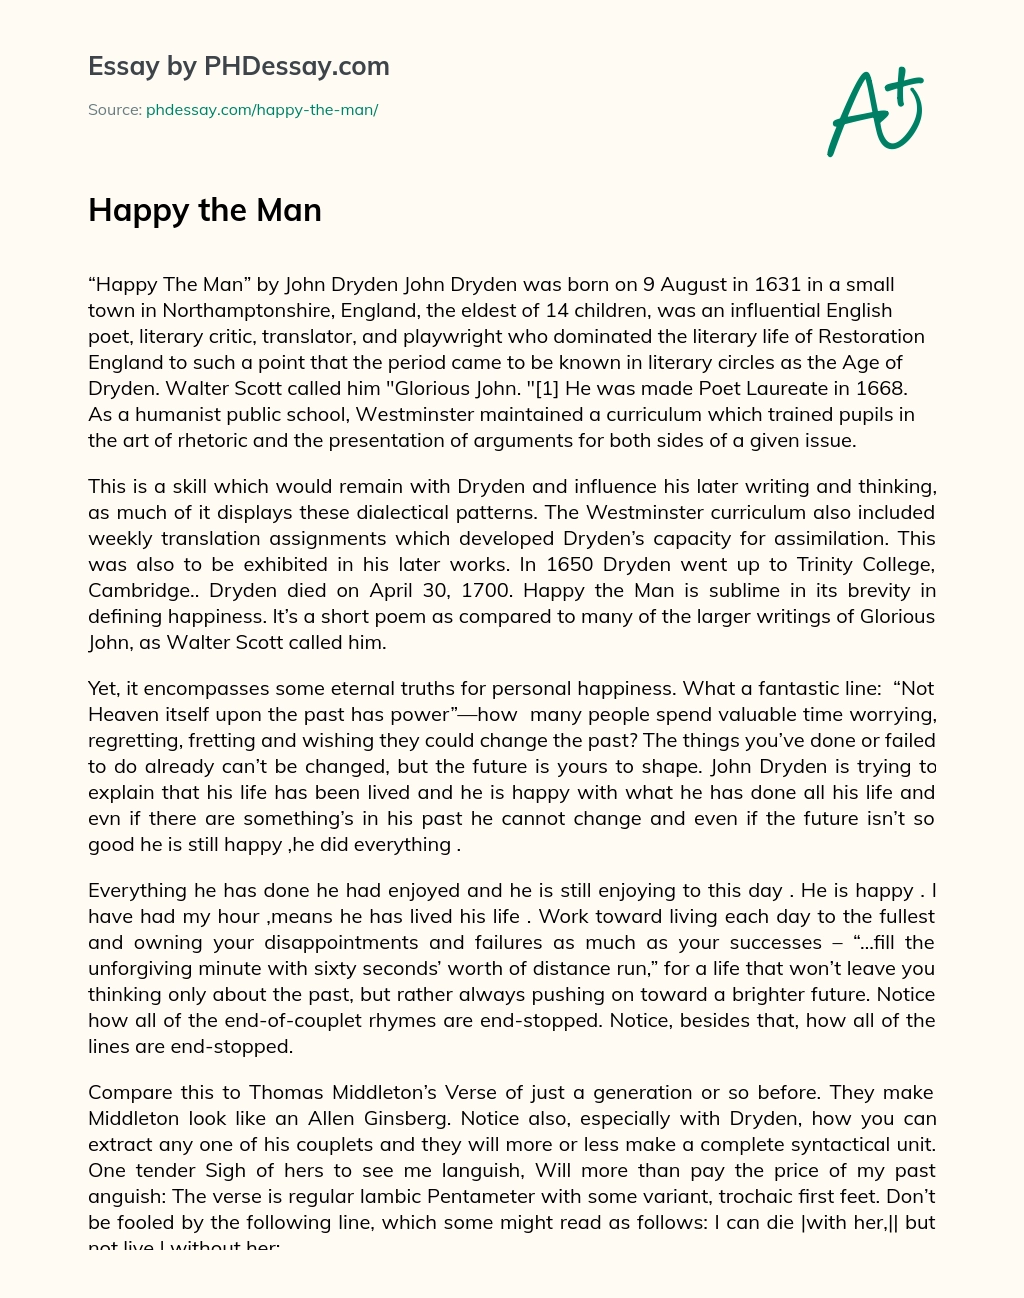 Happy the Man essay